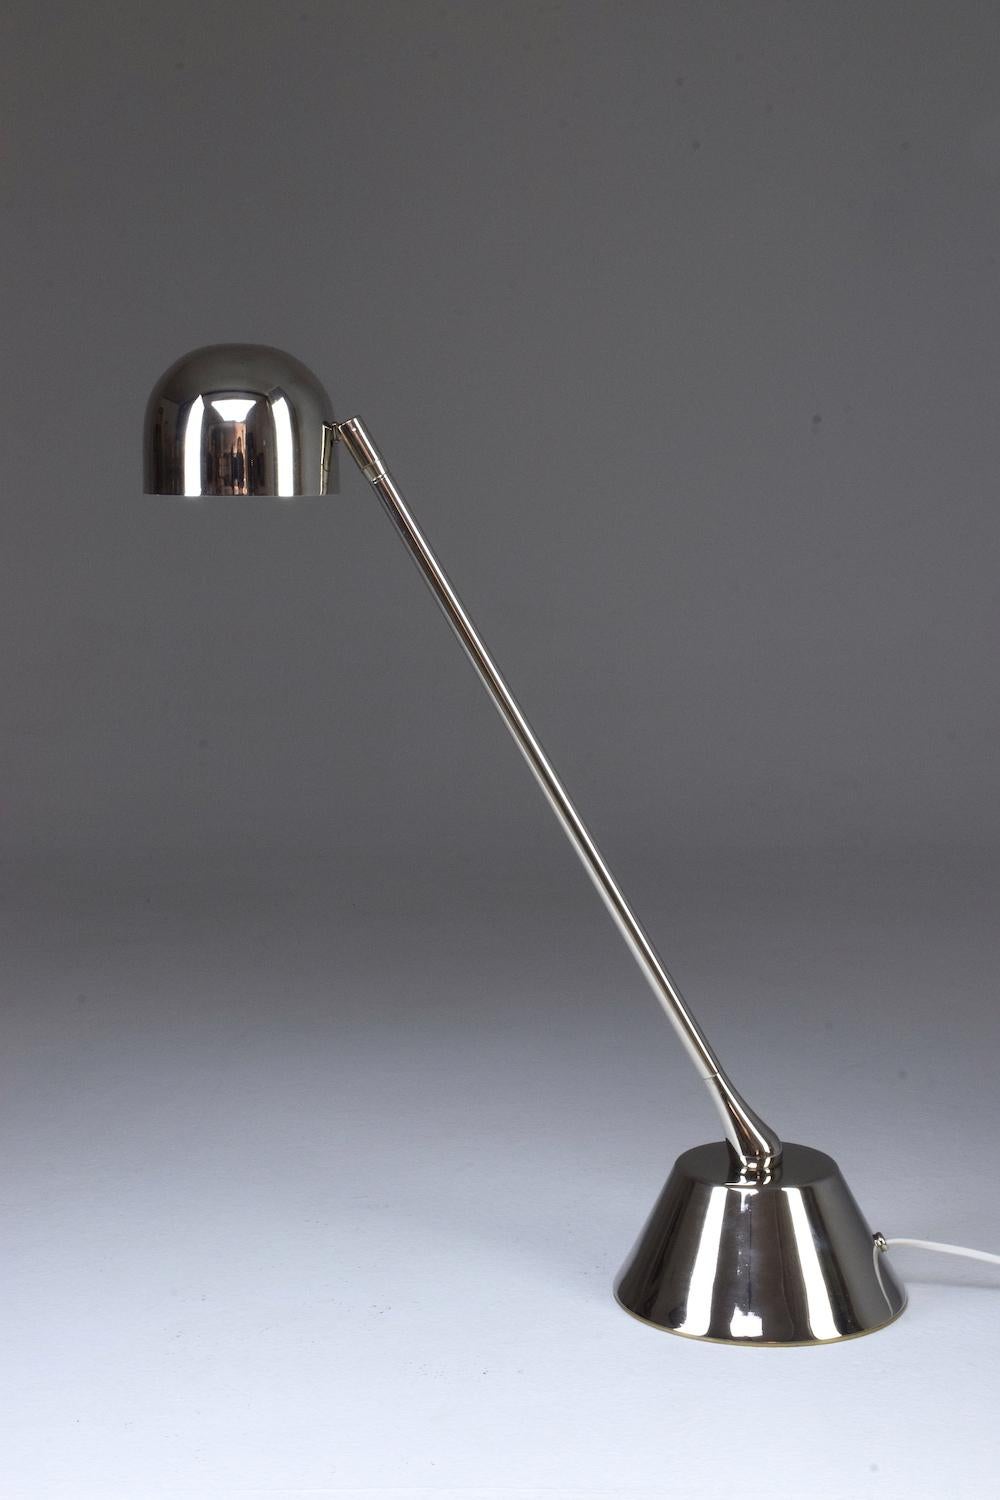 Modern De.Light T1 Nickeled Brass Desk Lamp, Flow 2 Collection For Sale